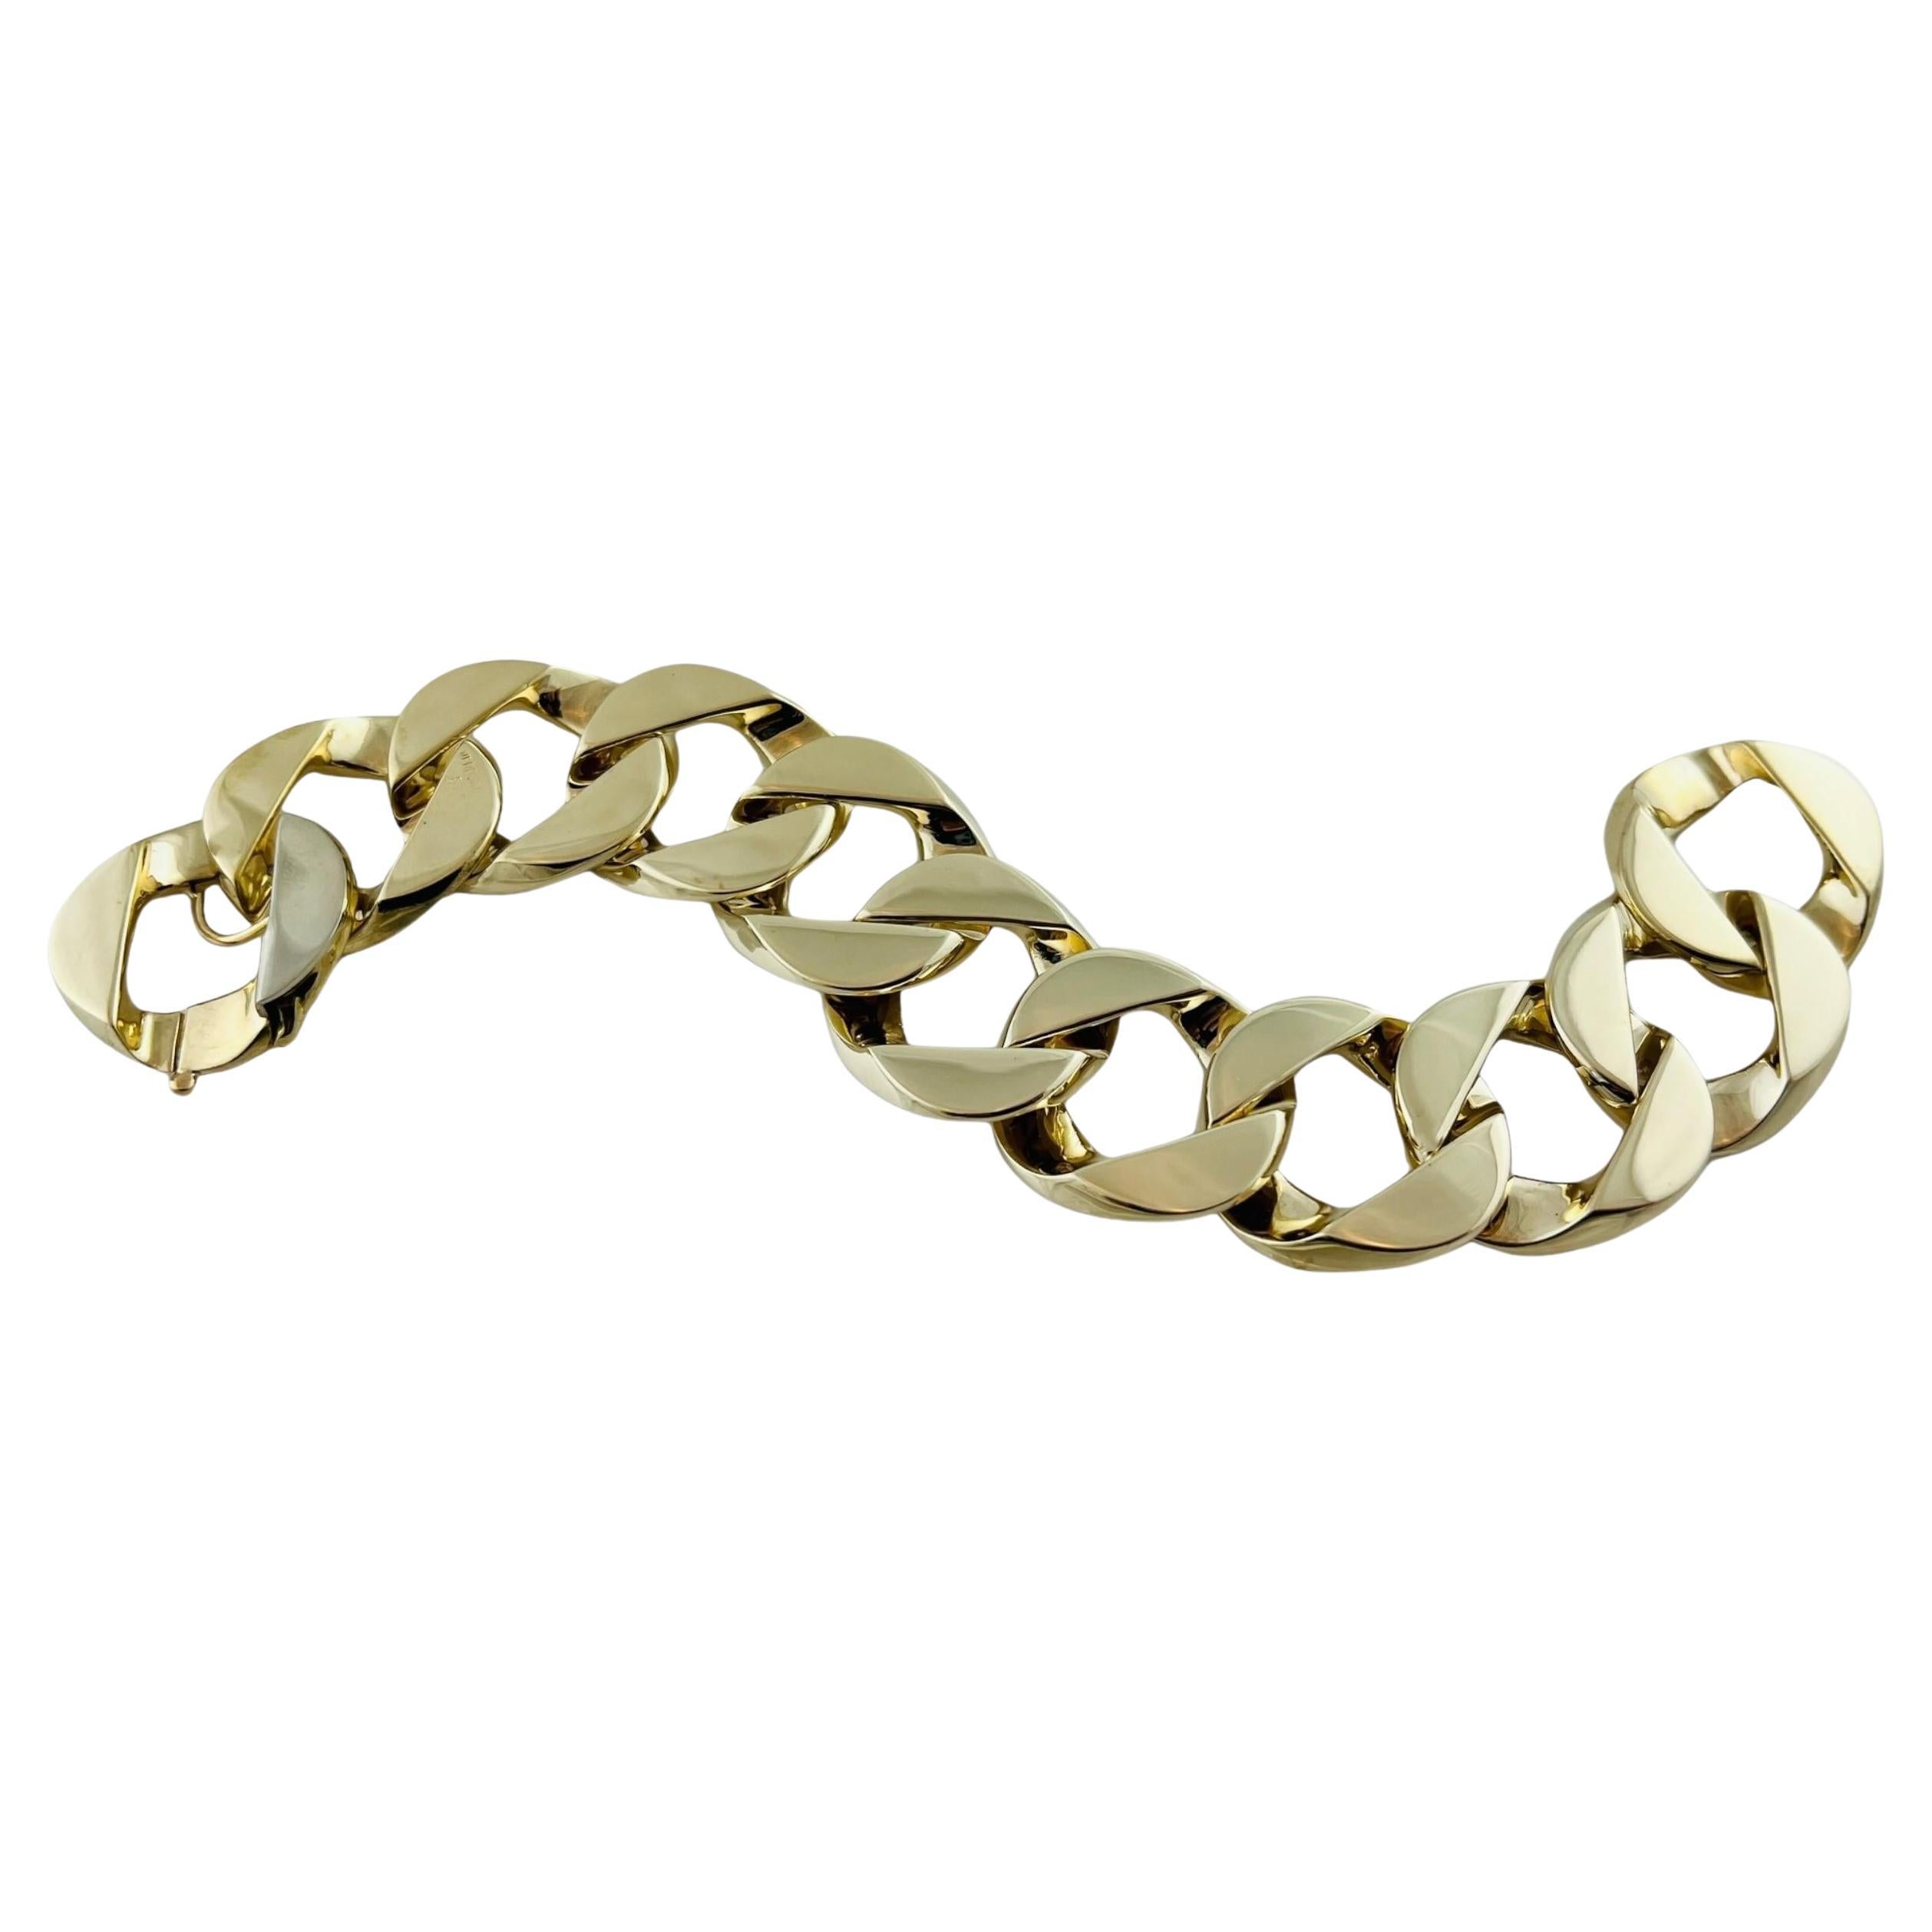 Verdura 14K Yellow Gold Classic Greta Garbo Style Gold Curb Link Bracelet #16770